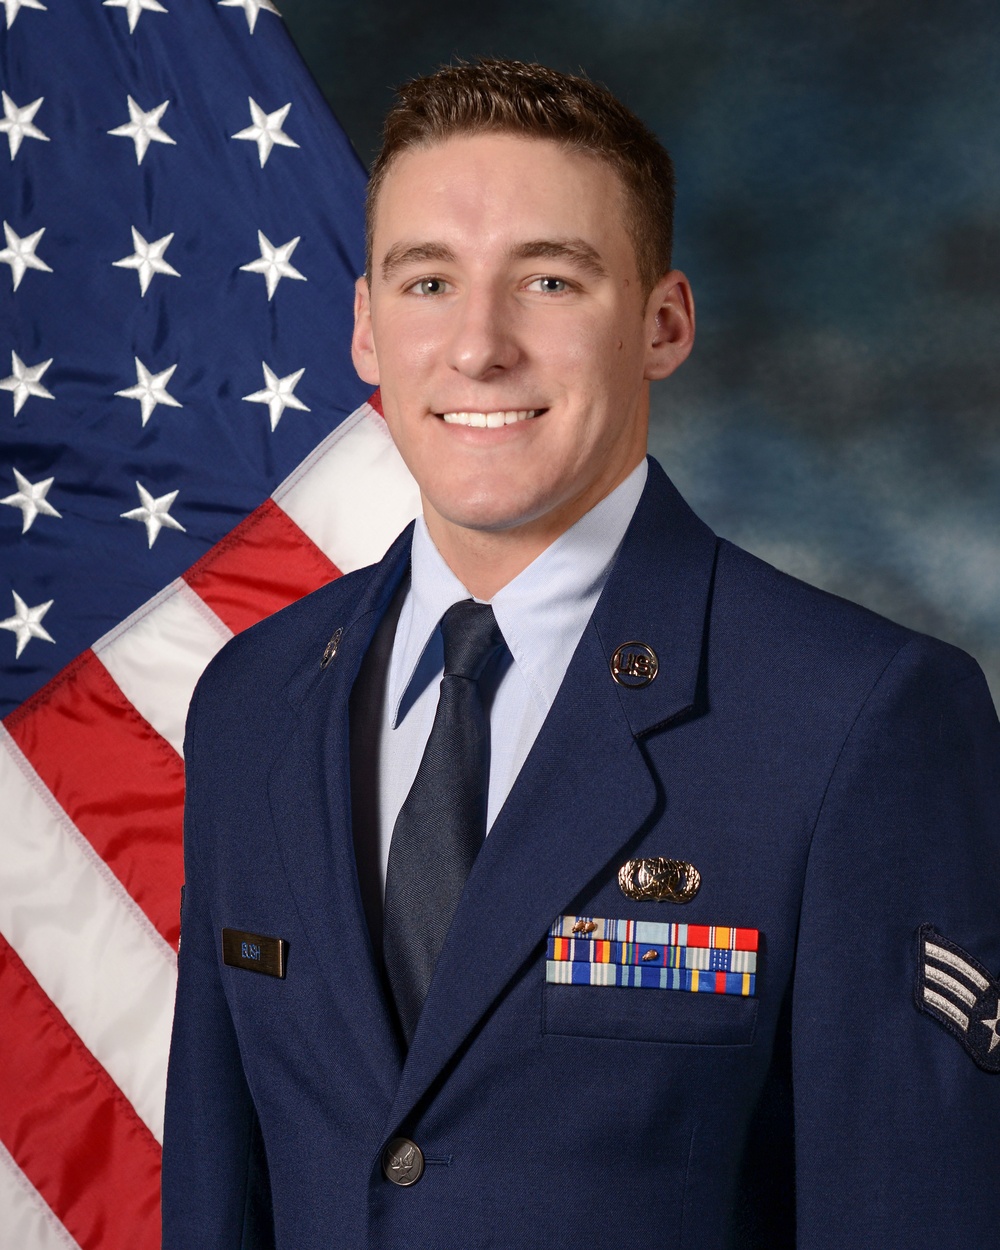 Senior Airman Cory W. Bush